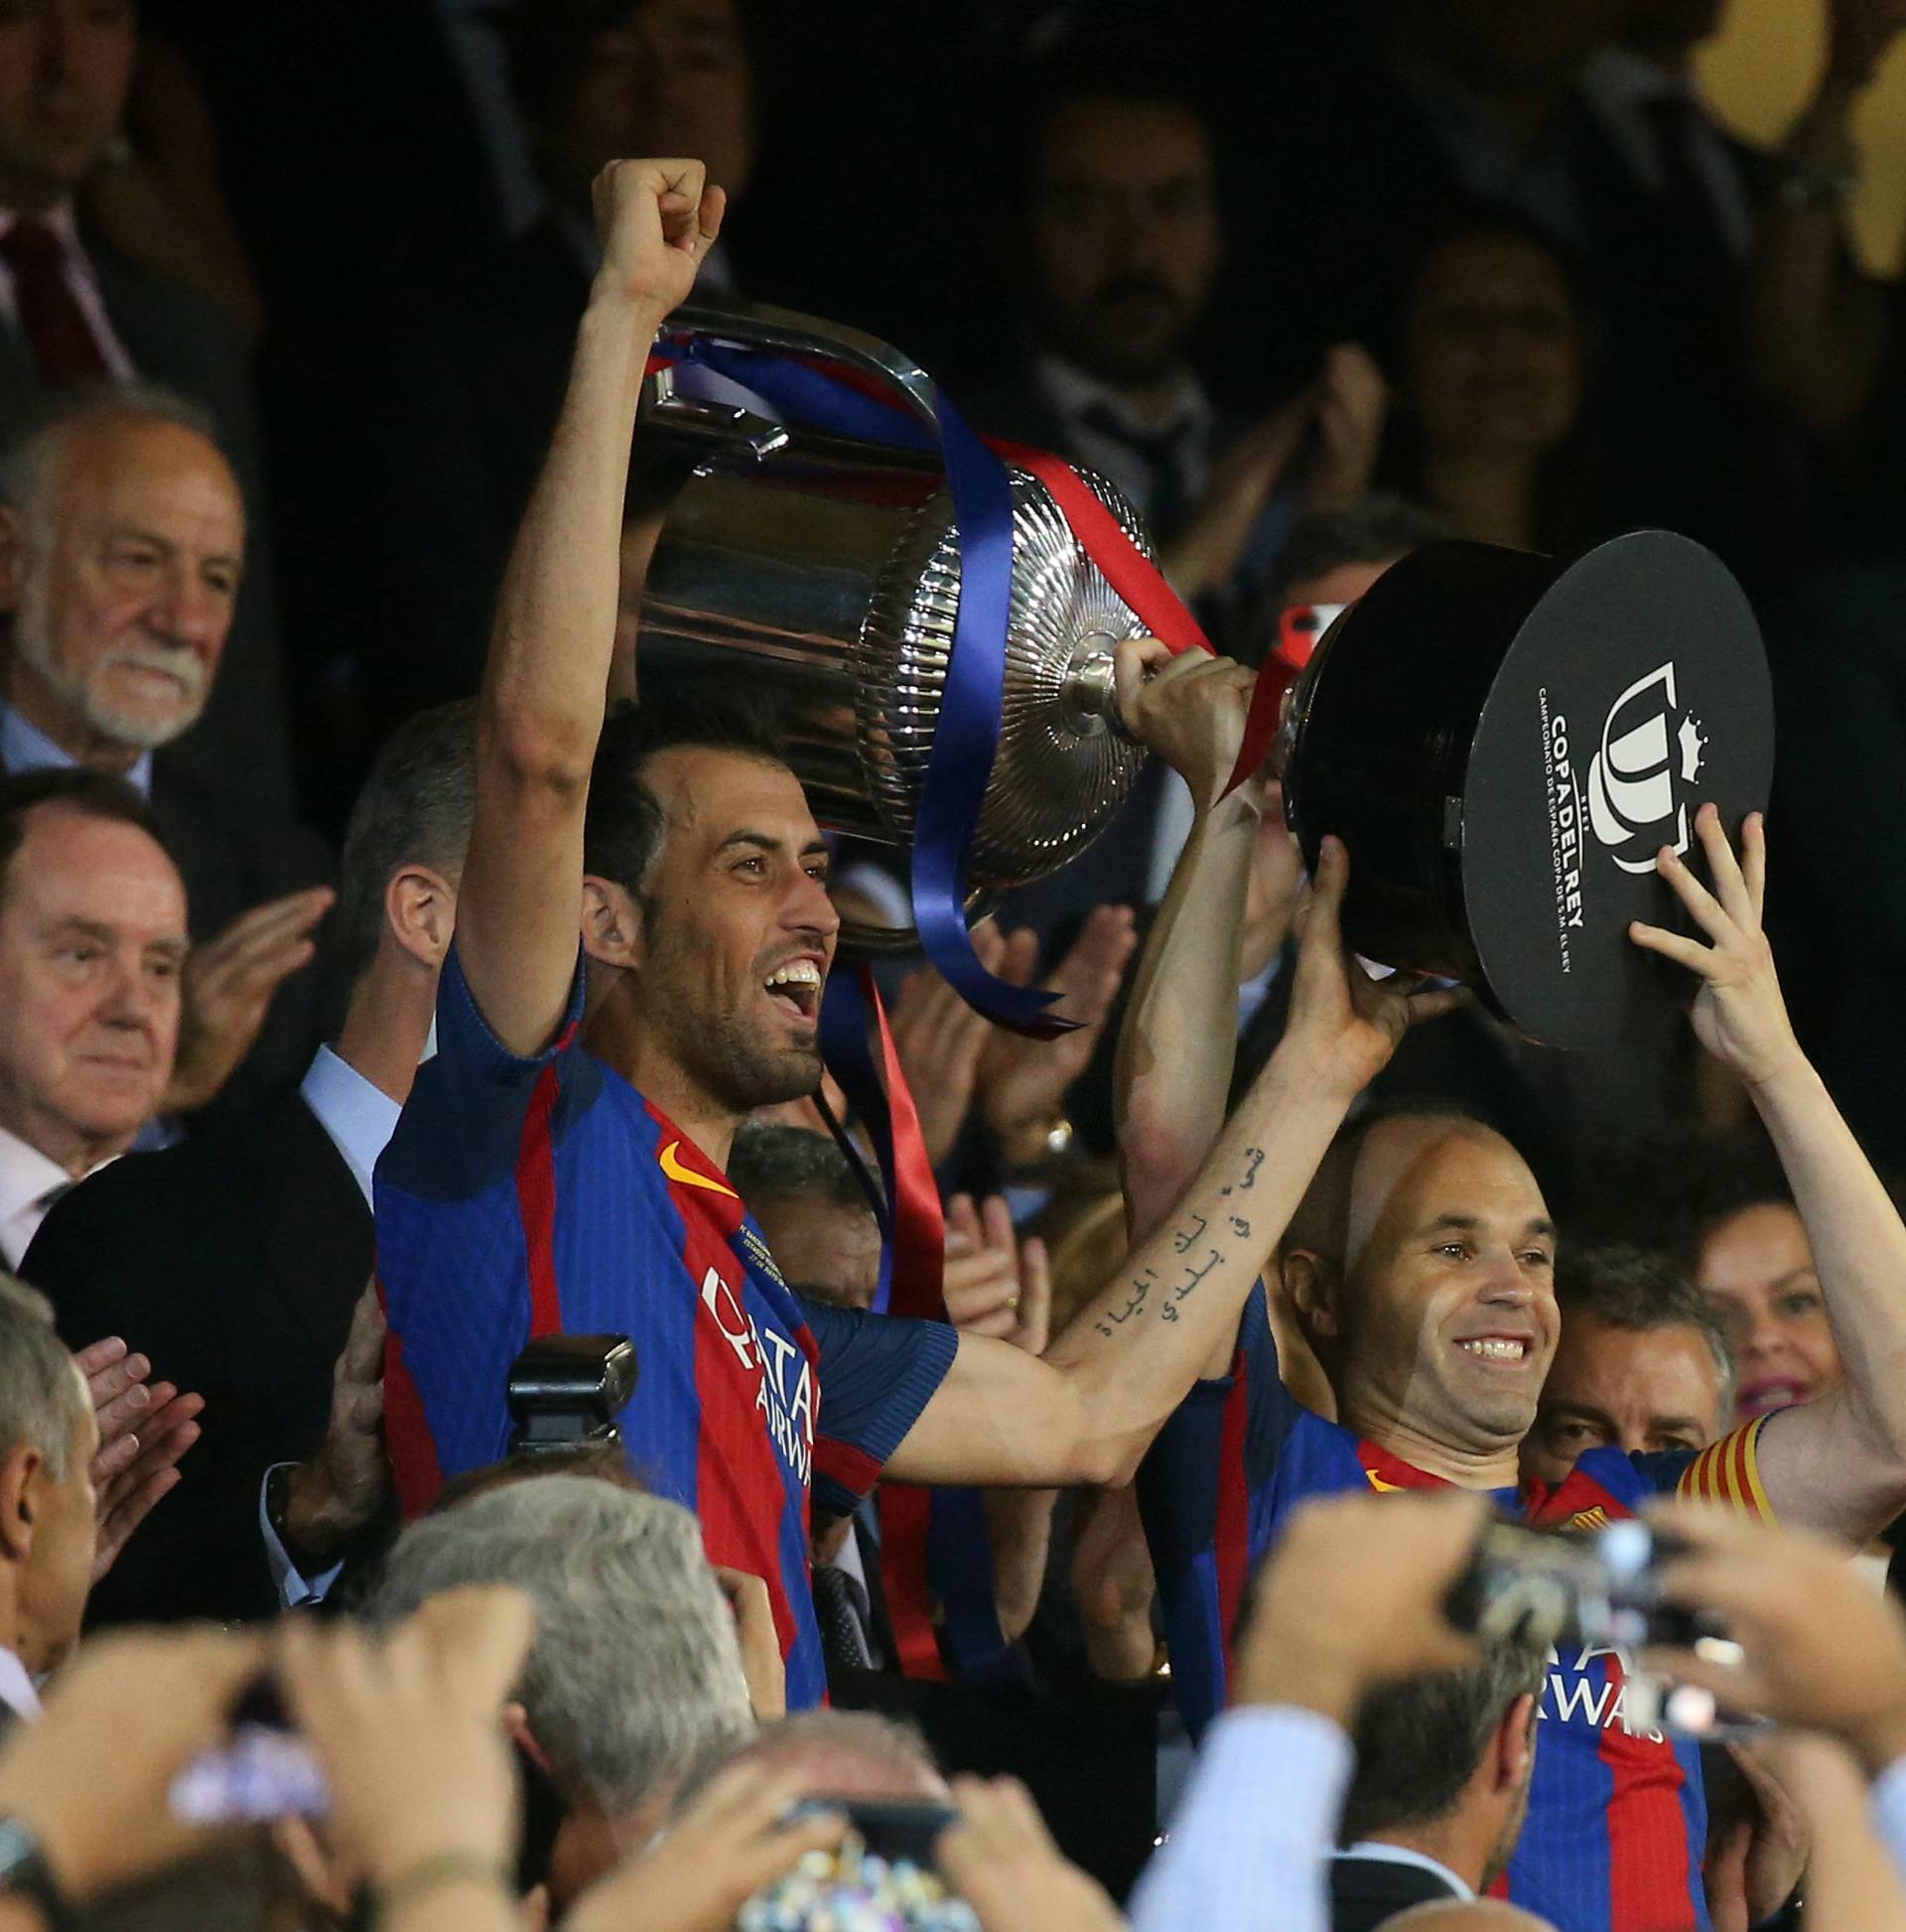 FC Barcelona v Deportivo Alaves - Spanish King's Cup Final